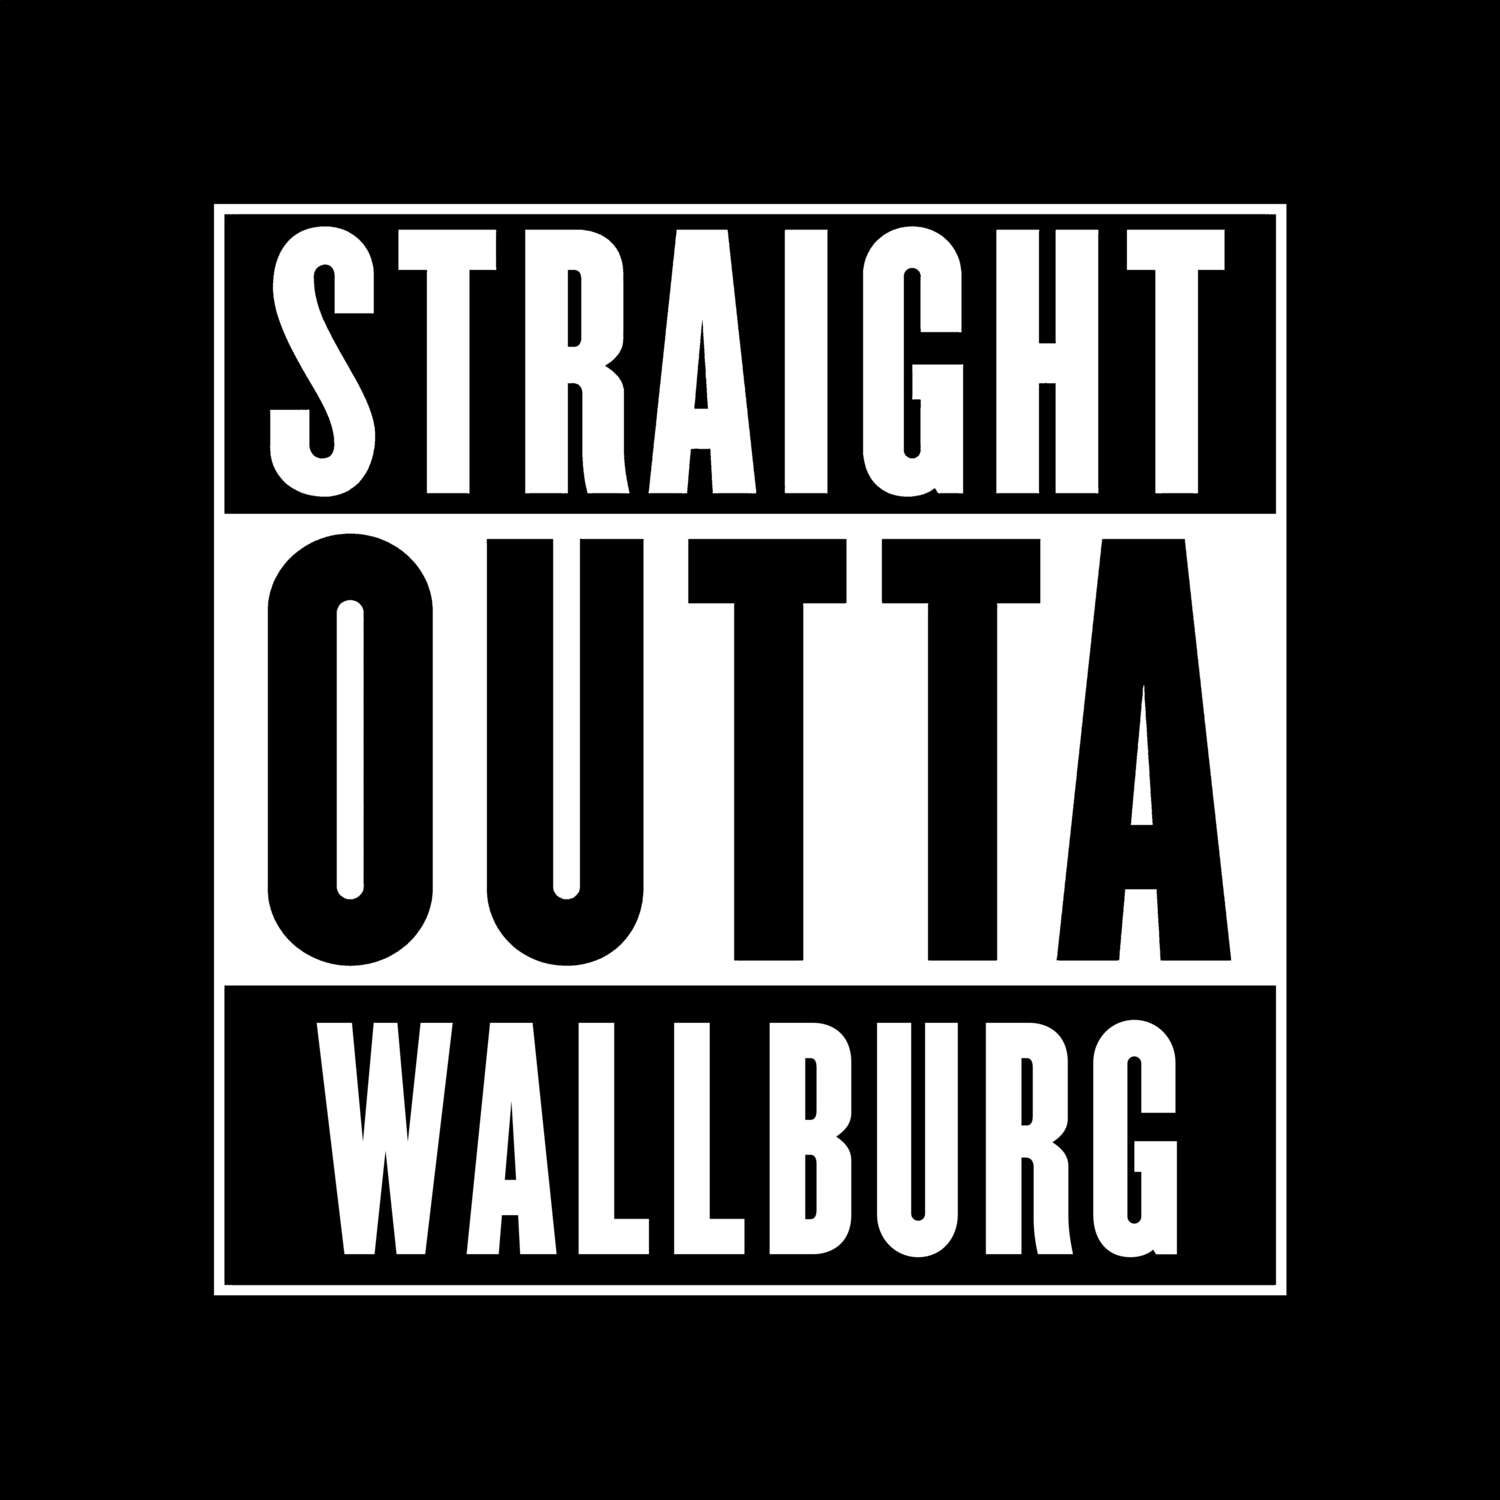 Wallburg T-Shirt »Straight Outta«